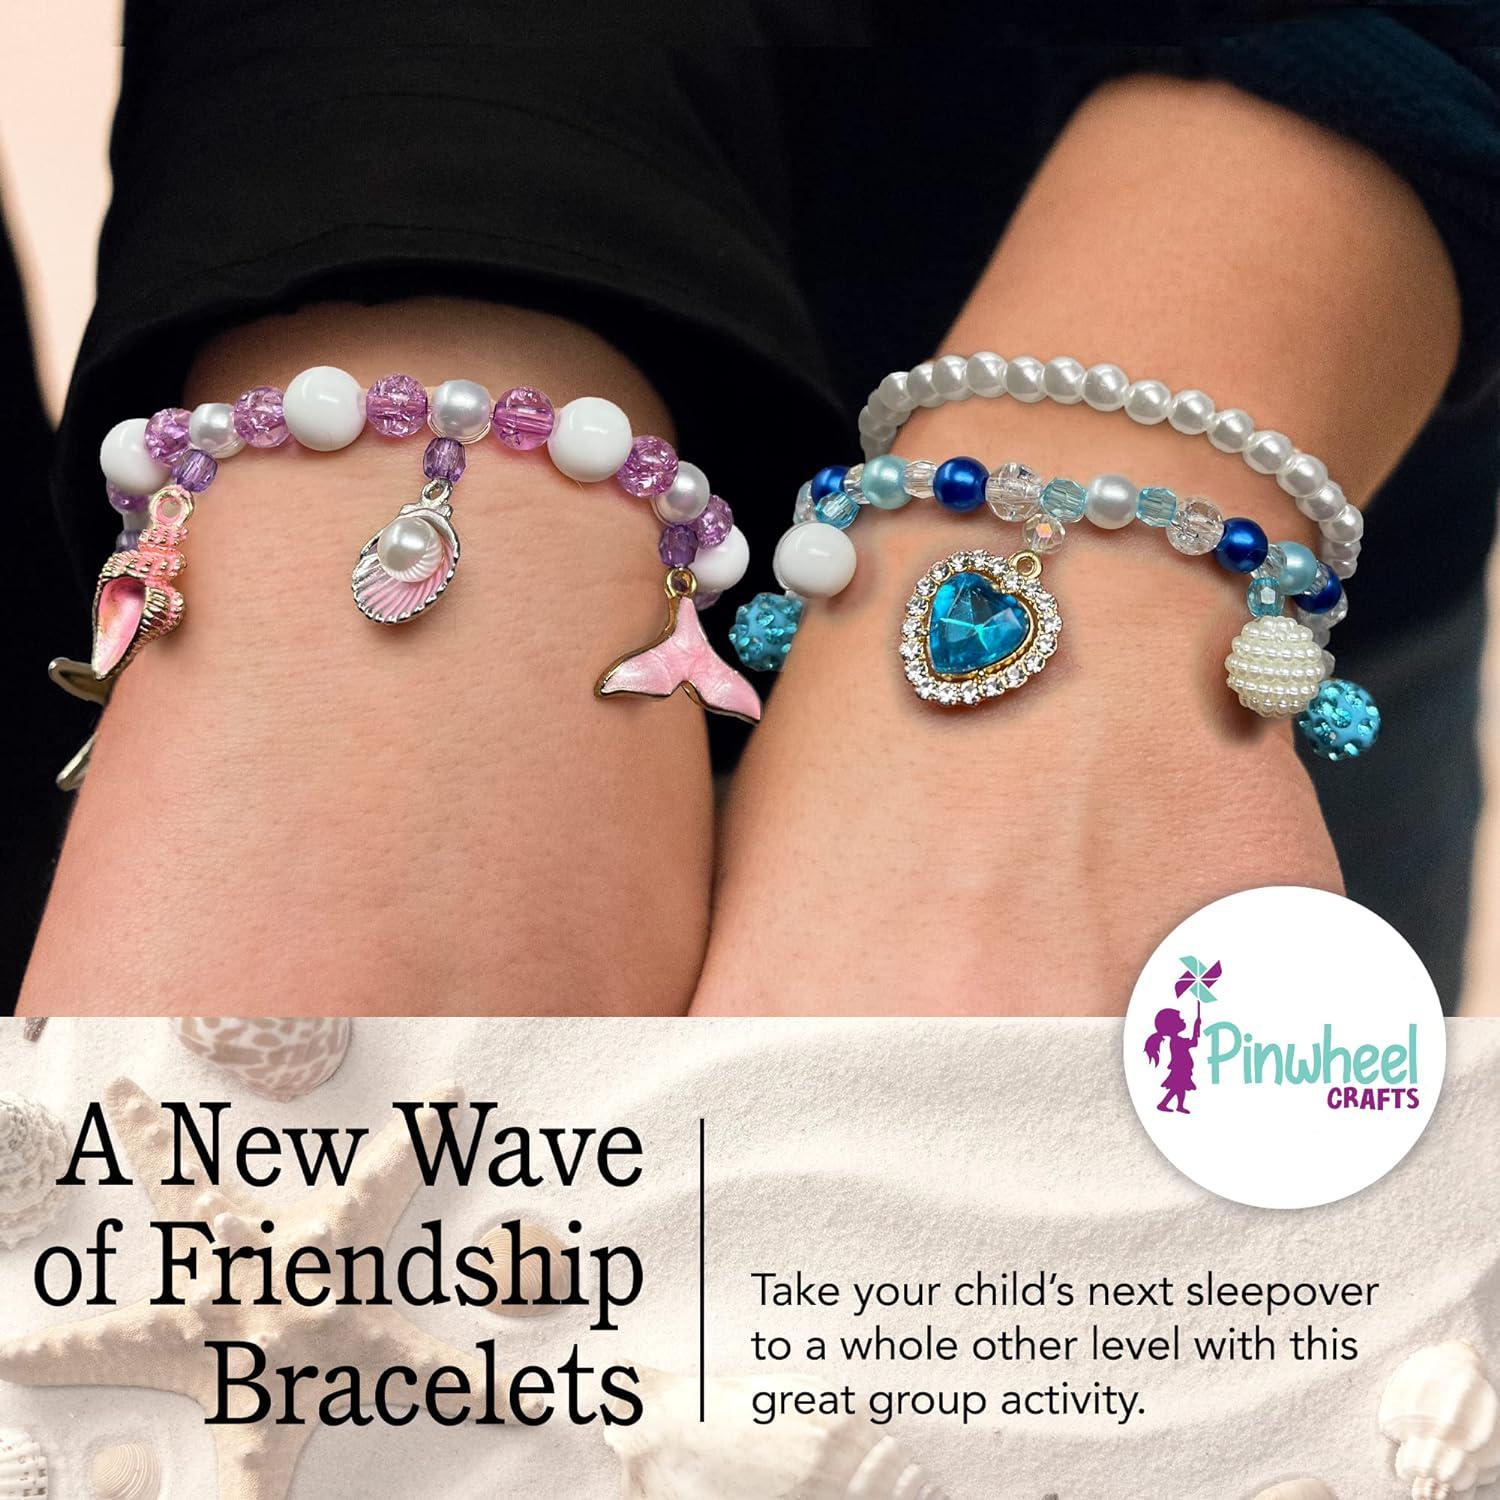 Pinwheel Crafts Mermaid Charm Jewelry Kit - and 50 similar items